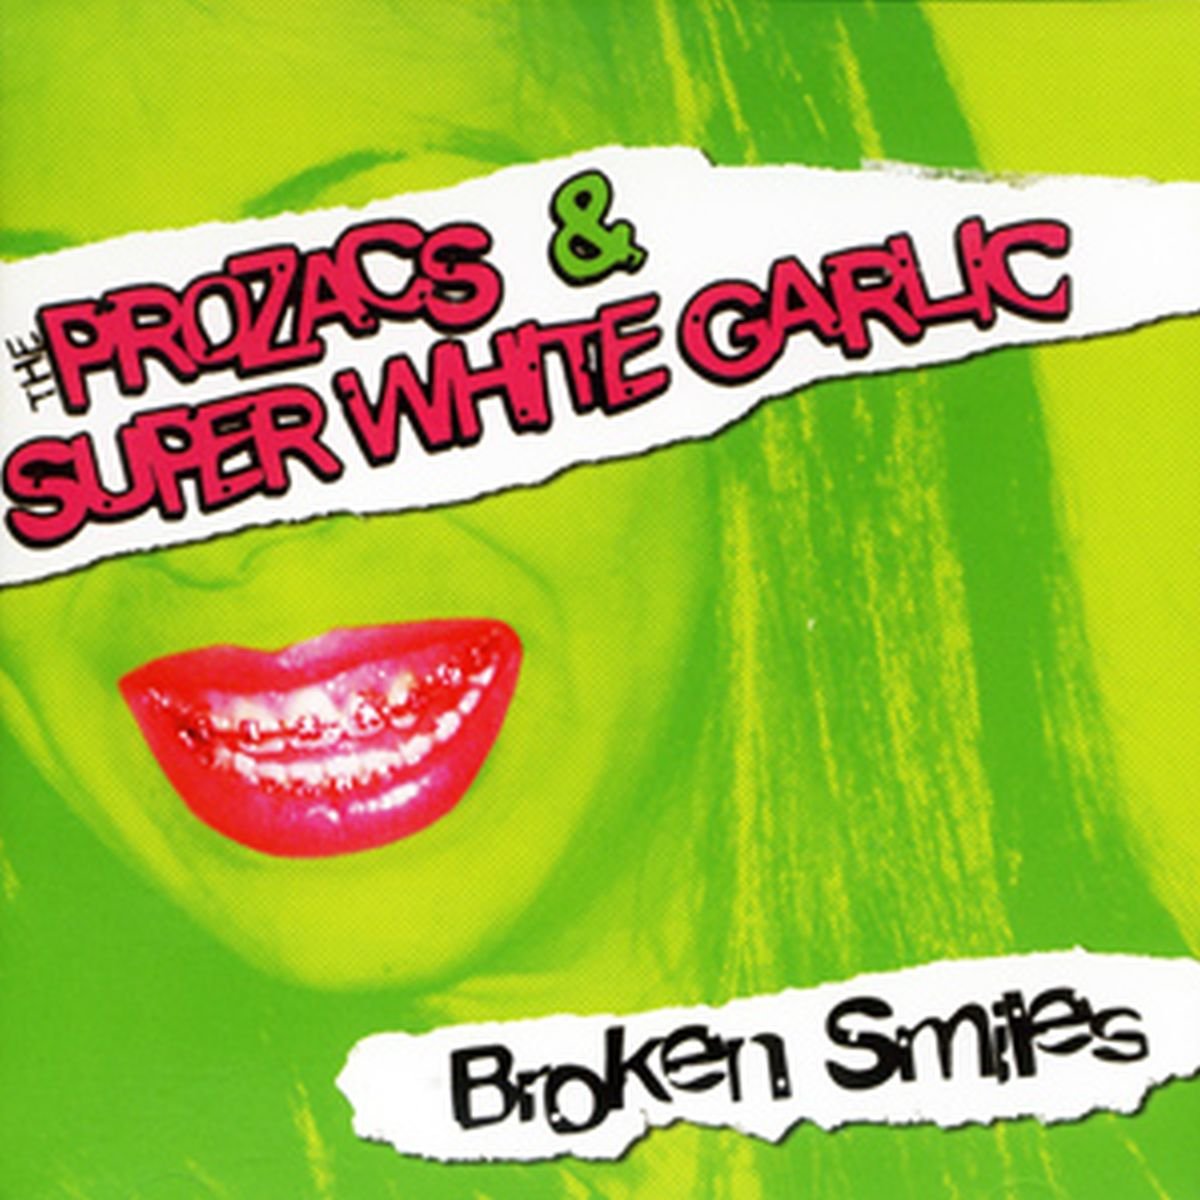 Super White Garlic & Prozacs - Broken Smiles